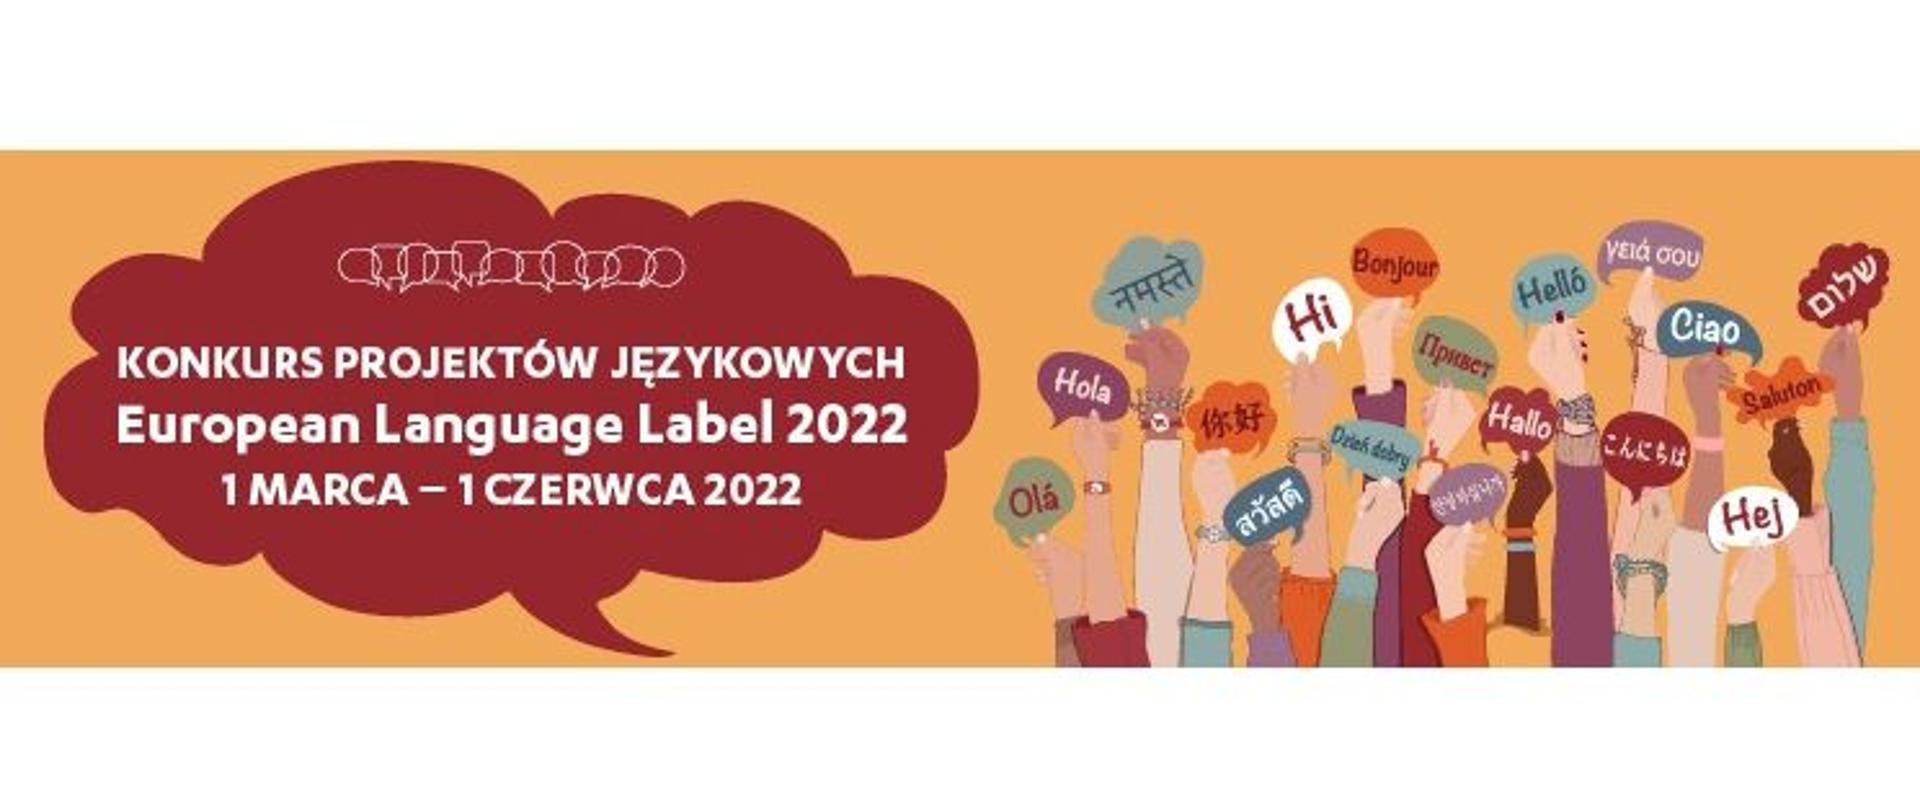 European Language Label 2022